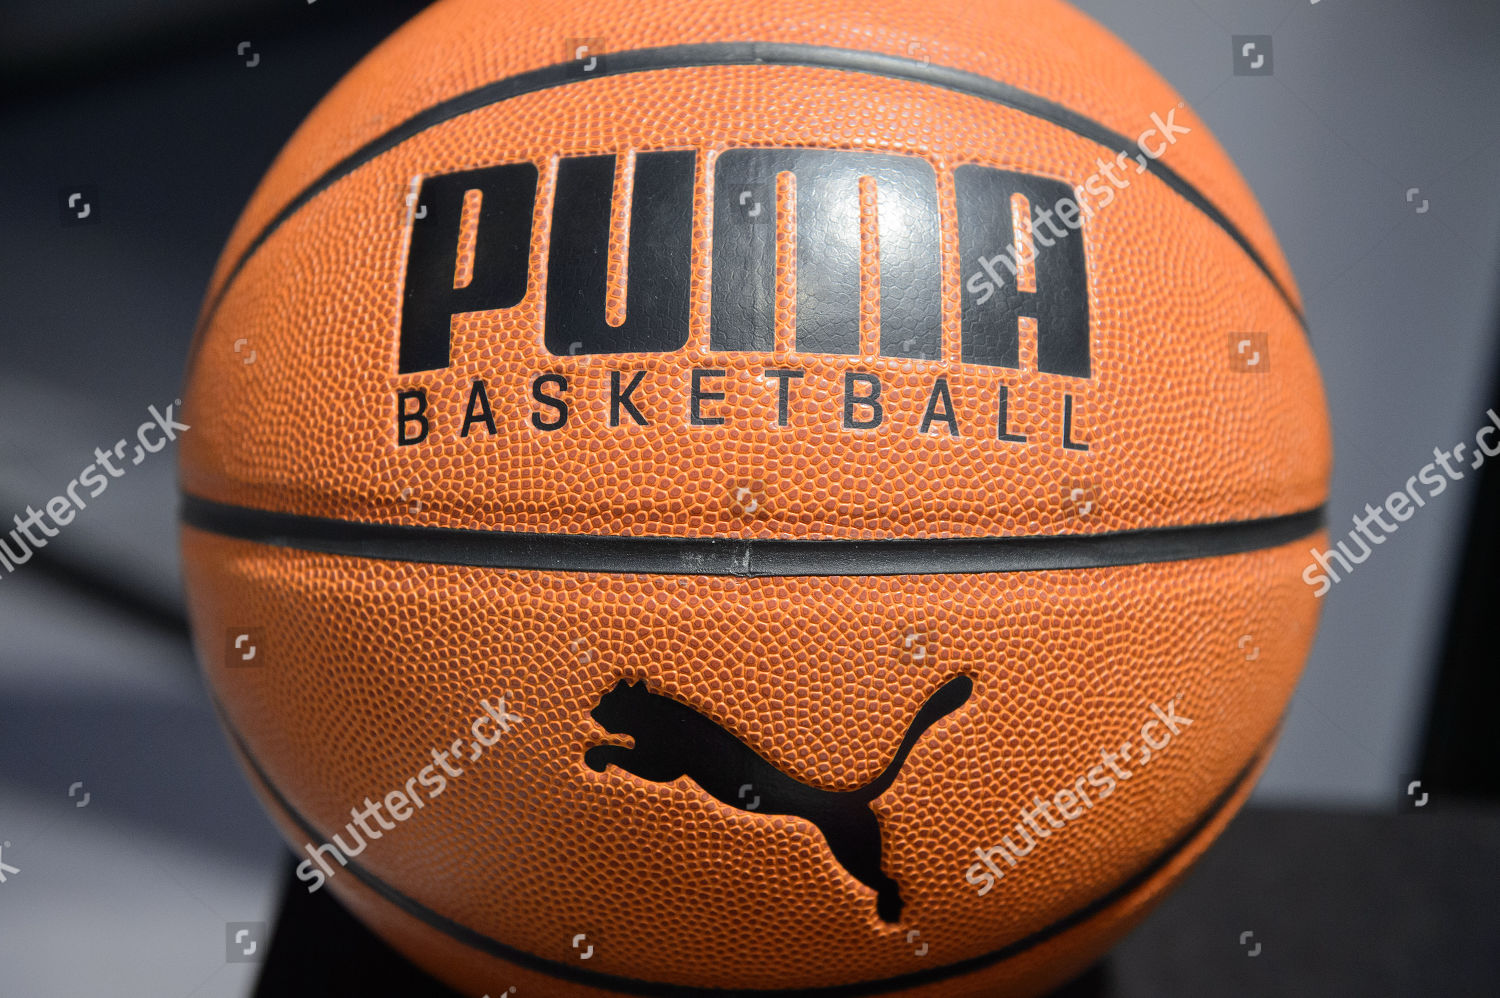 puma basketball stock